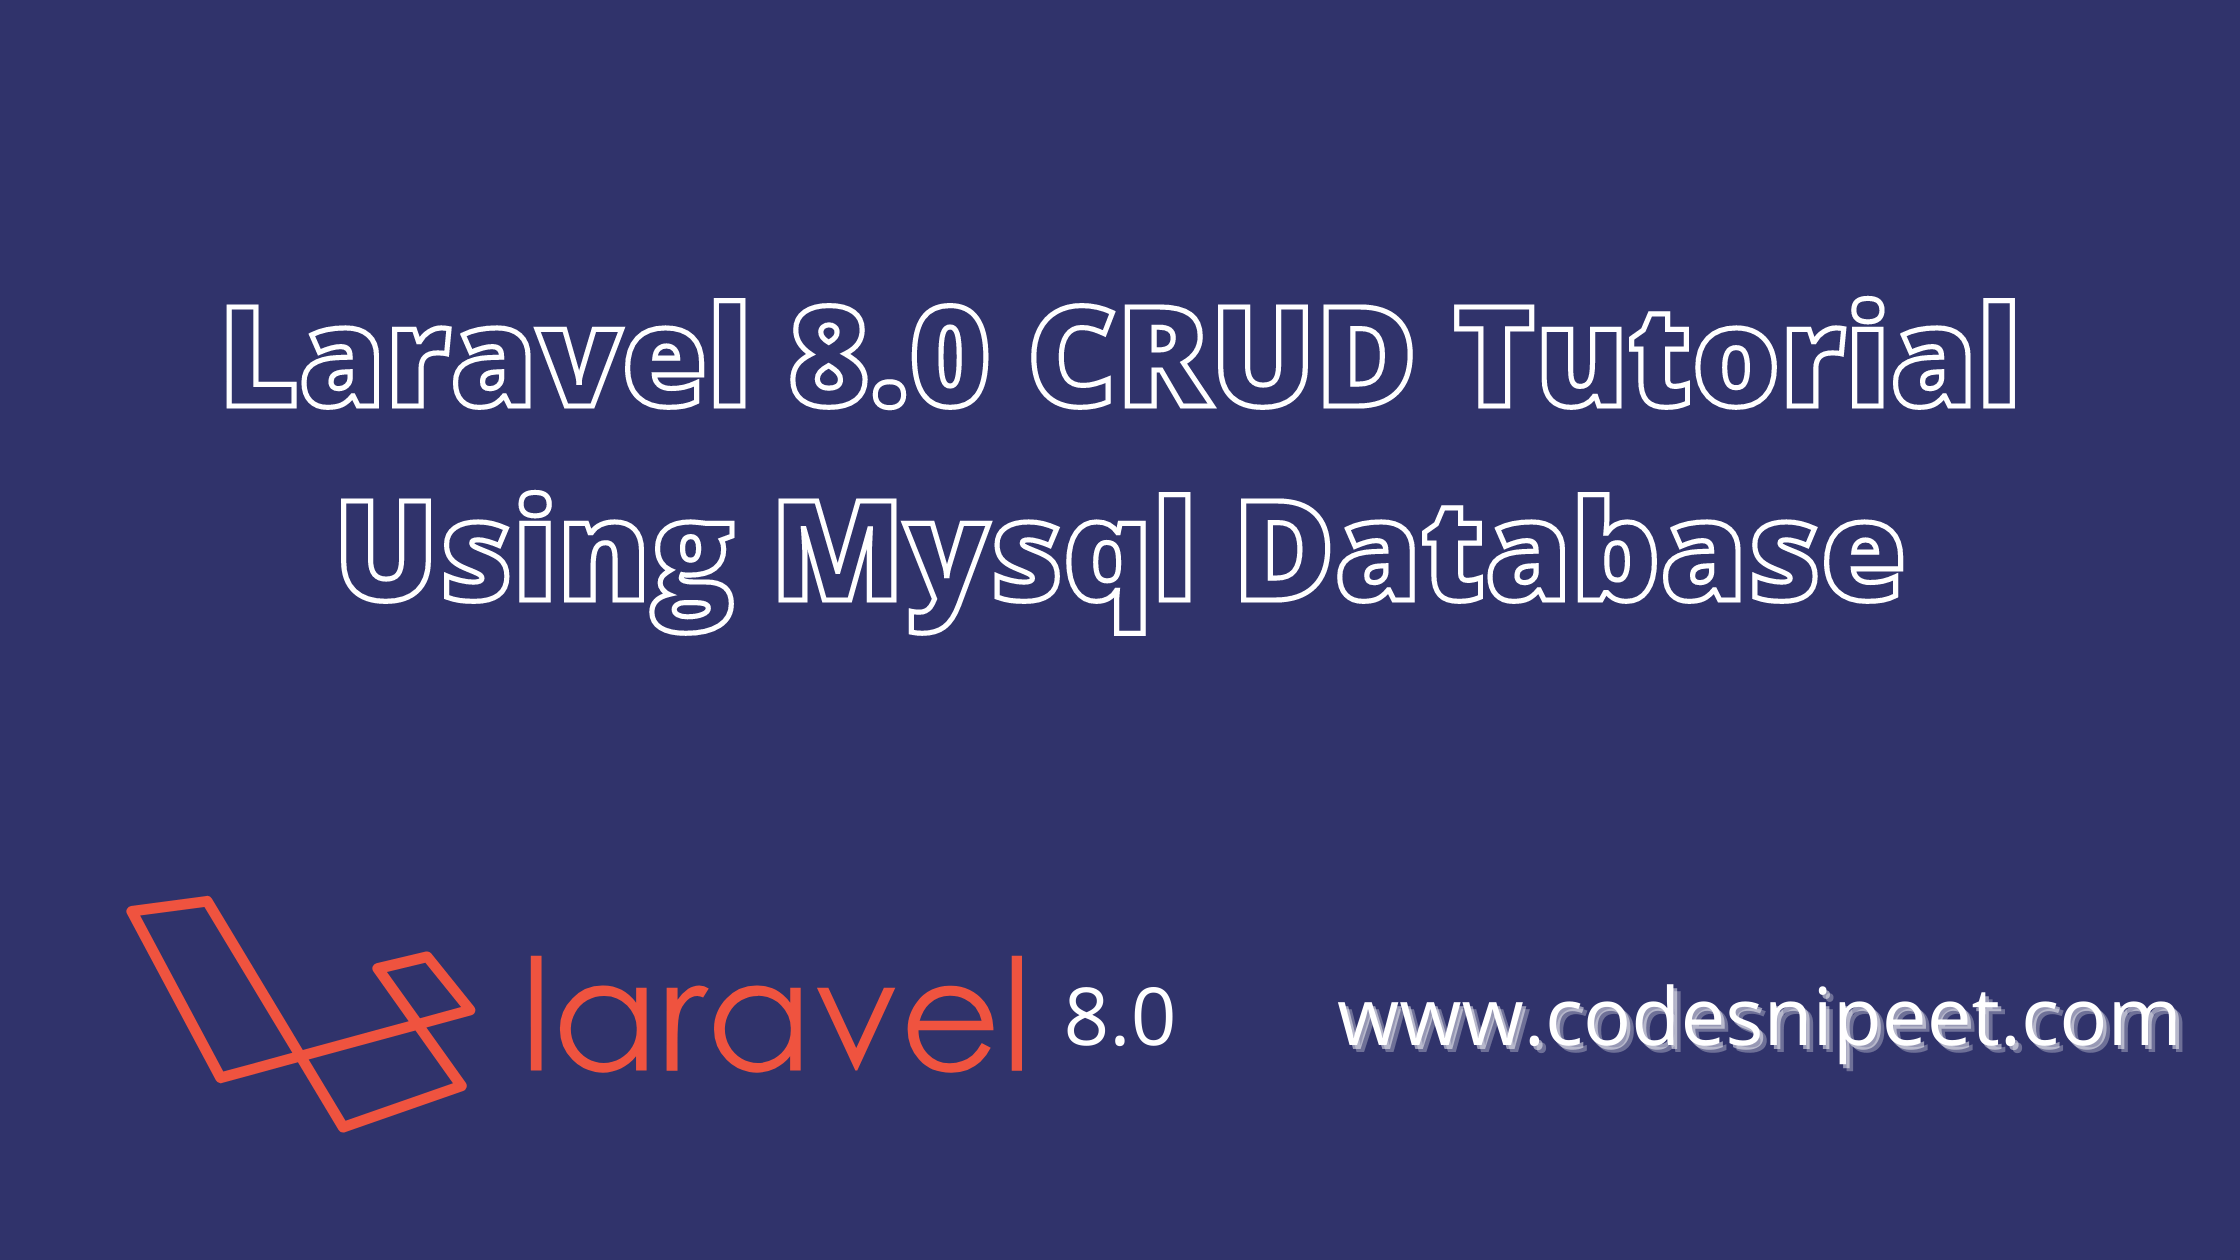 You are currently viewing Laravel 8.0 CRUD Tutorial Using Mysql Database